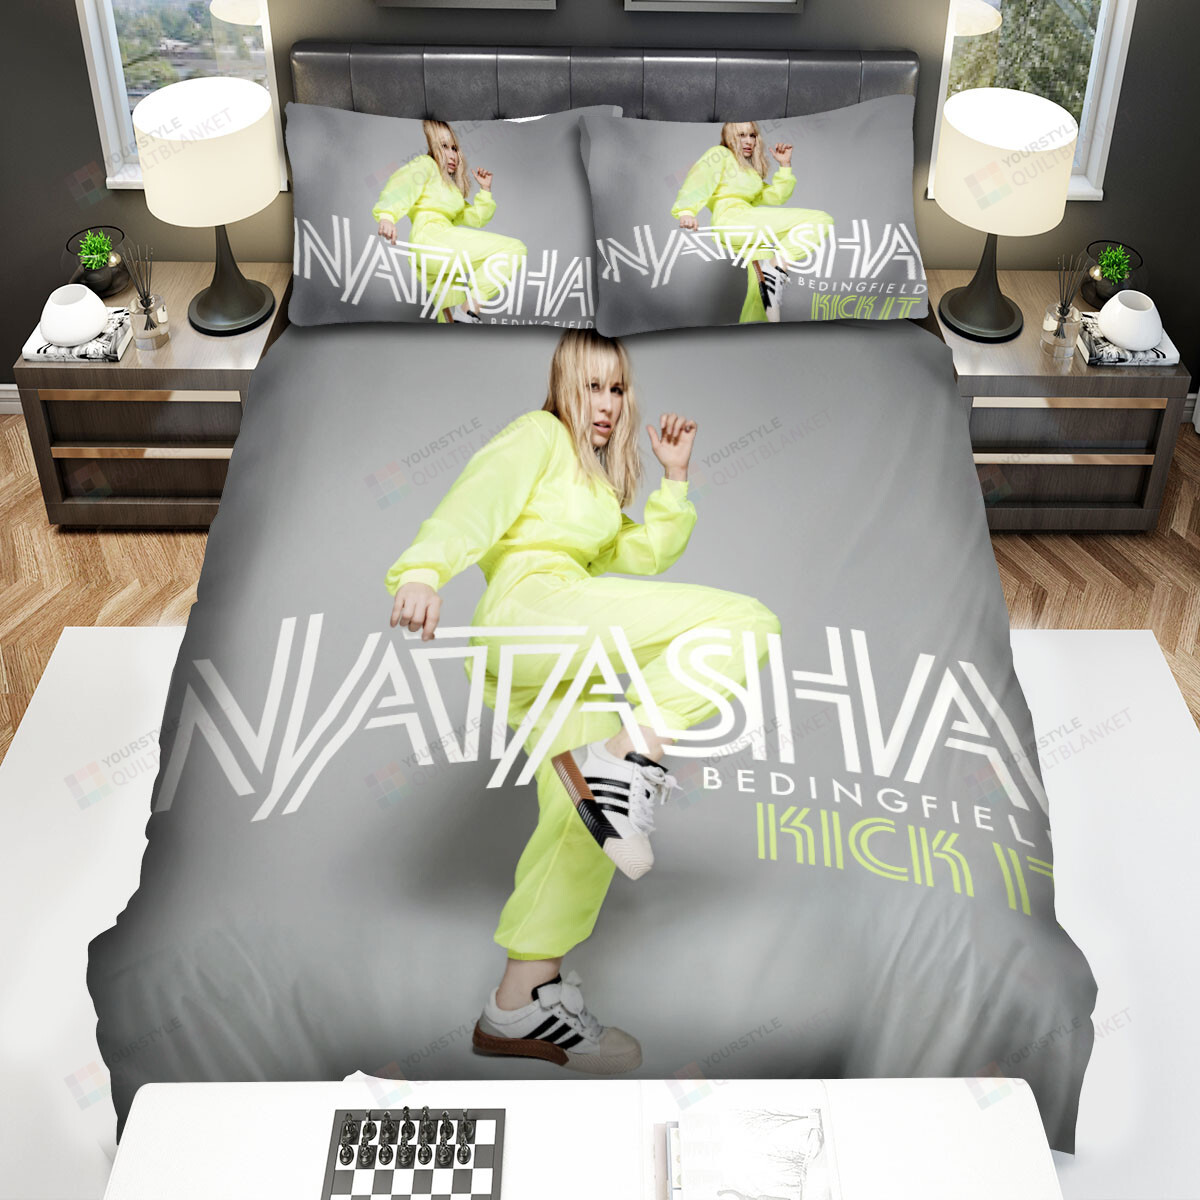 Natasha Bedingfield Kick It Bed Sheets Spread Comforter Duvet Cover Bedding Sets